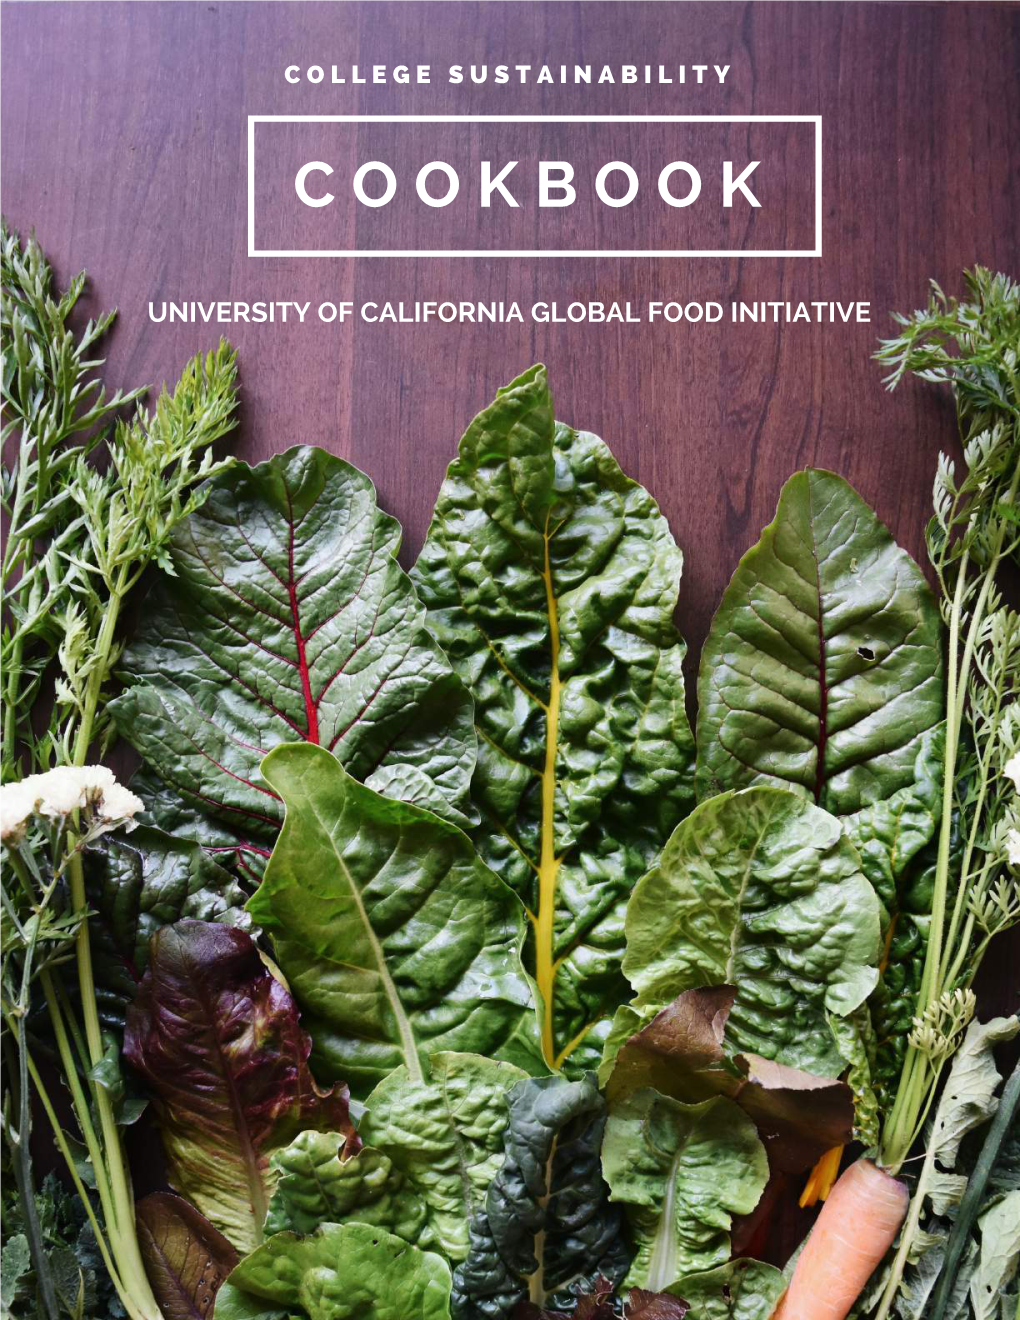 College Sustainability Cookbook